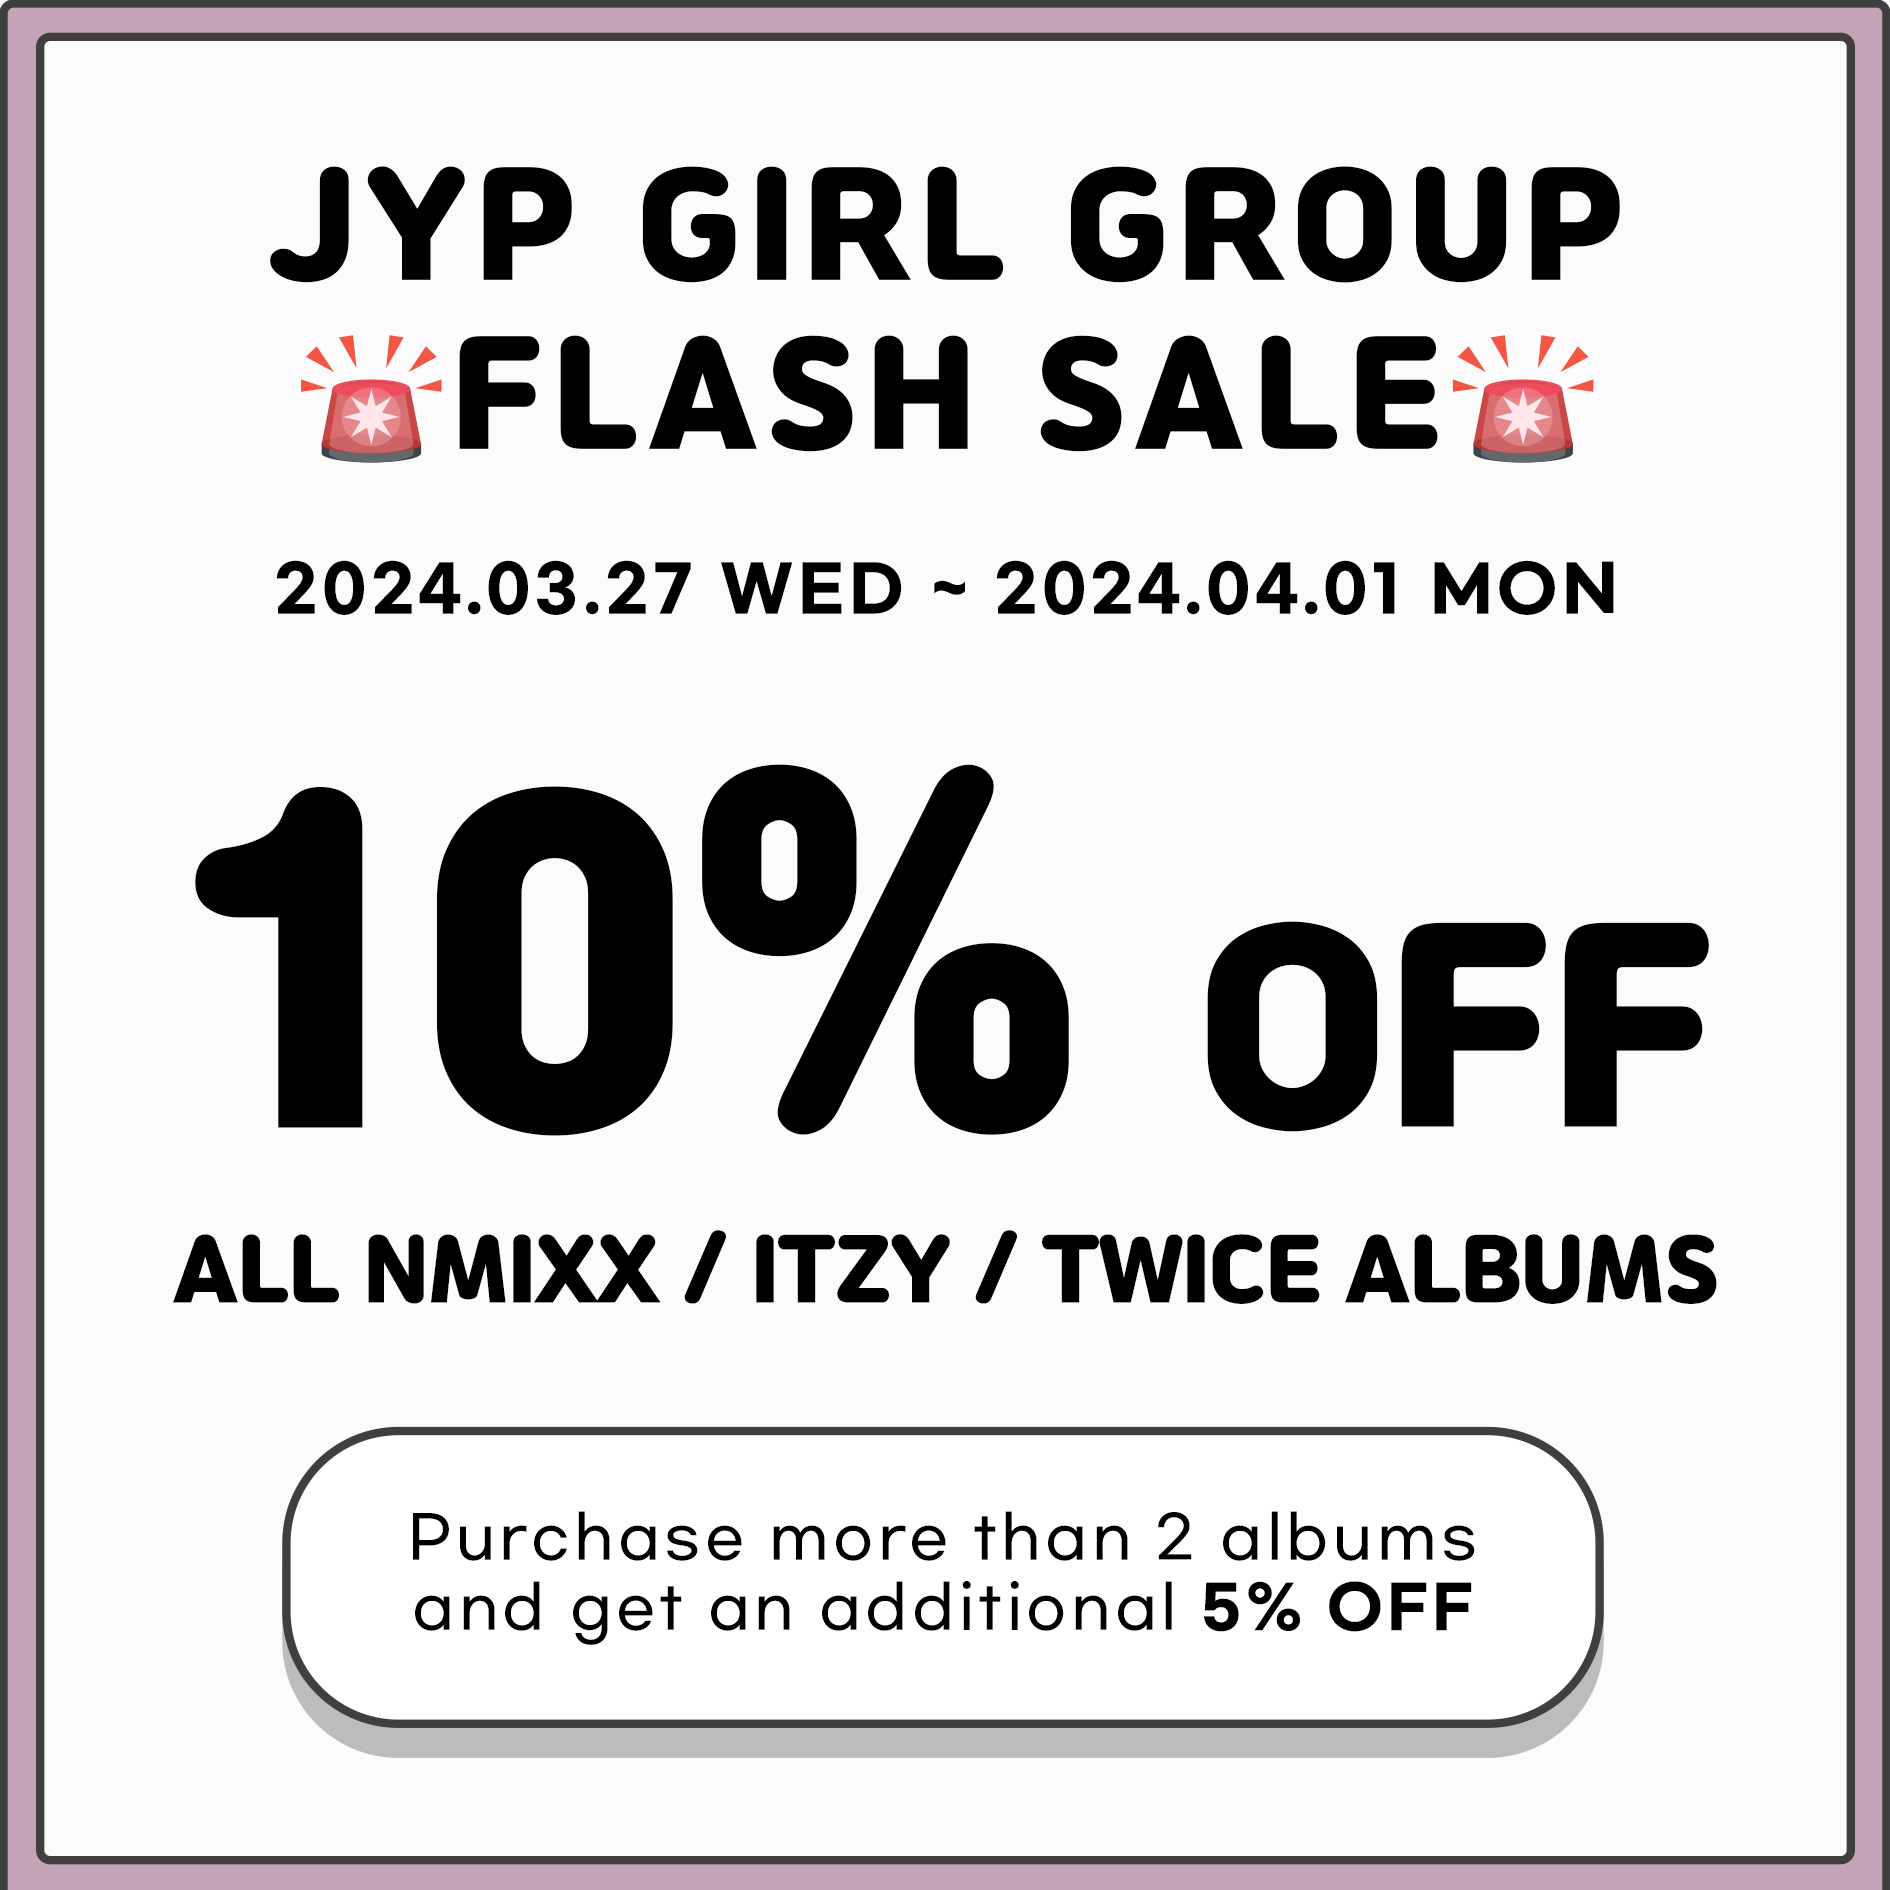 jyp_girl_group_promo.png